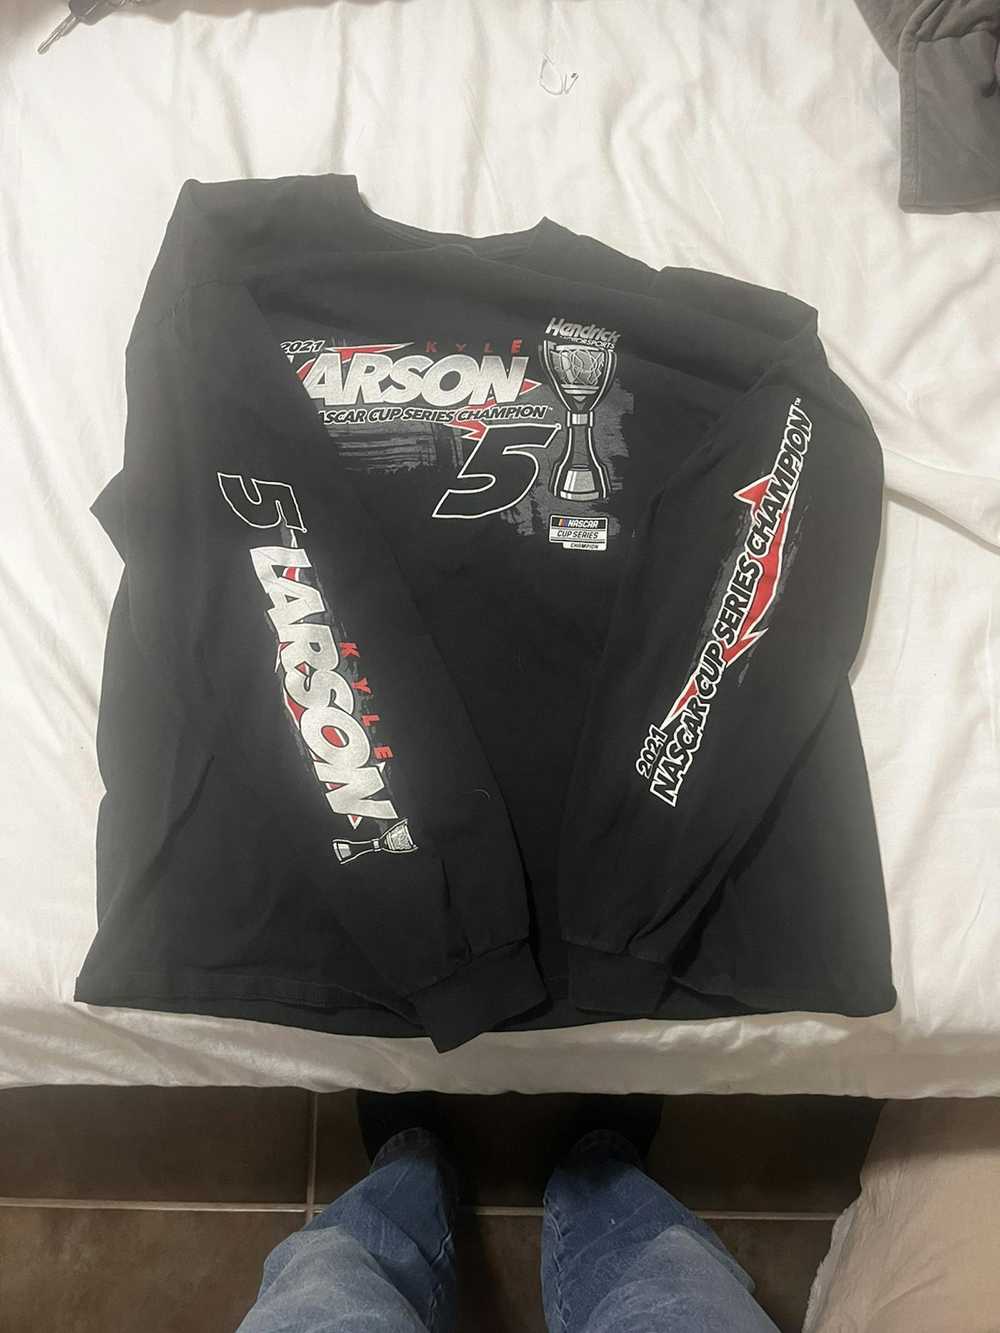 NASCAR NASCAR Kyle Larson Championship t-shirt - image 4